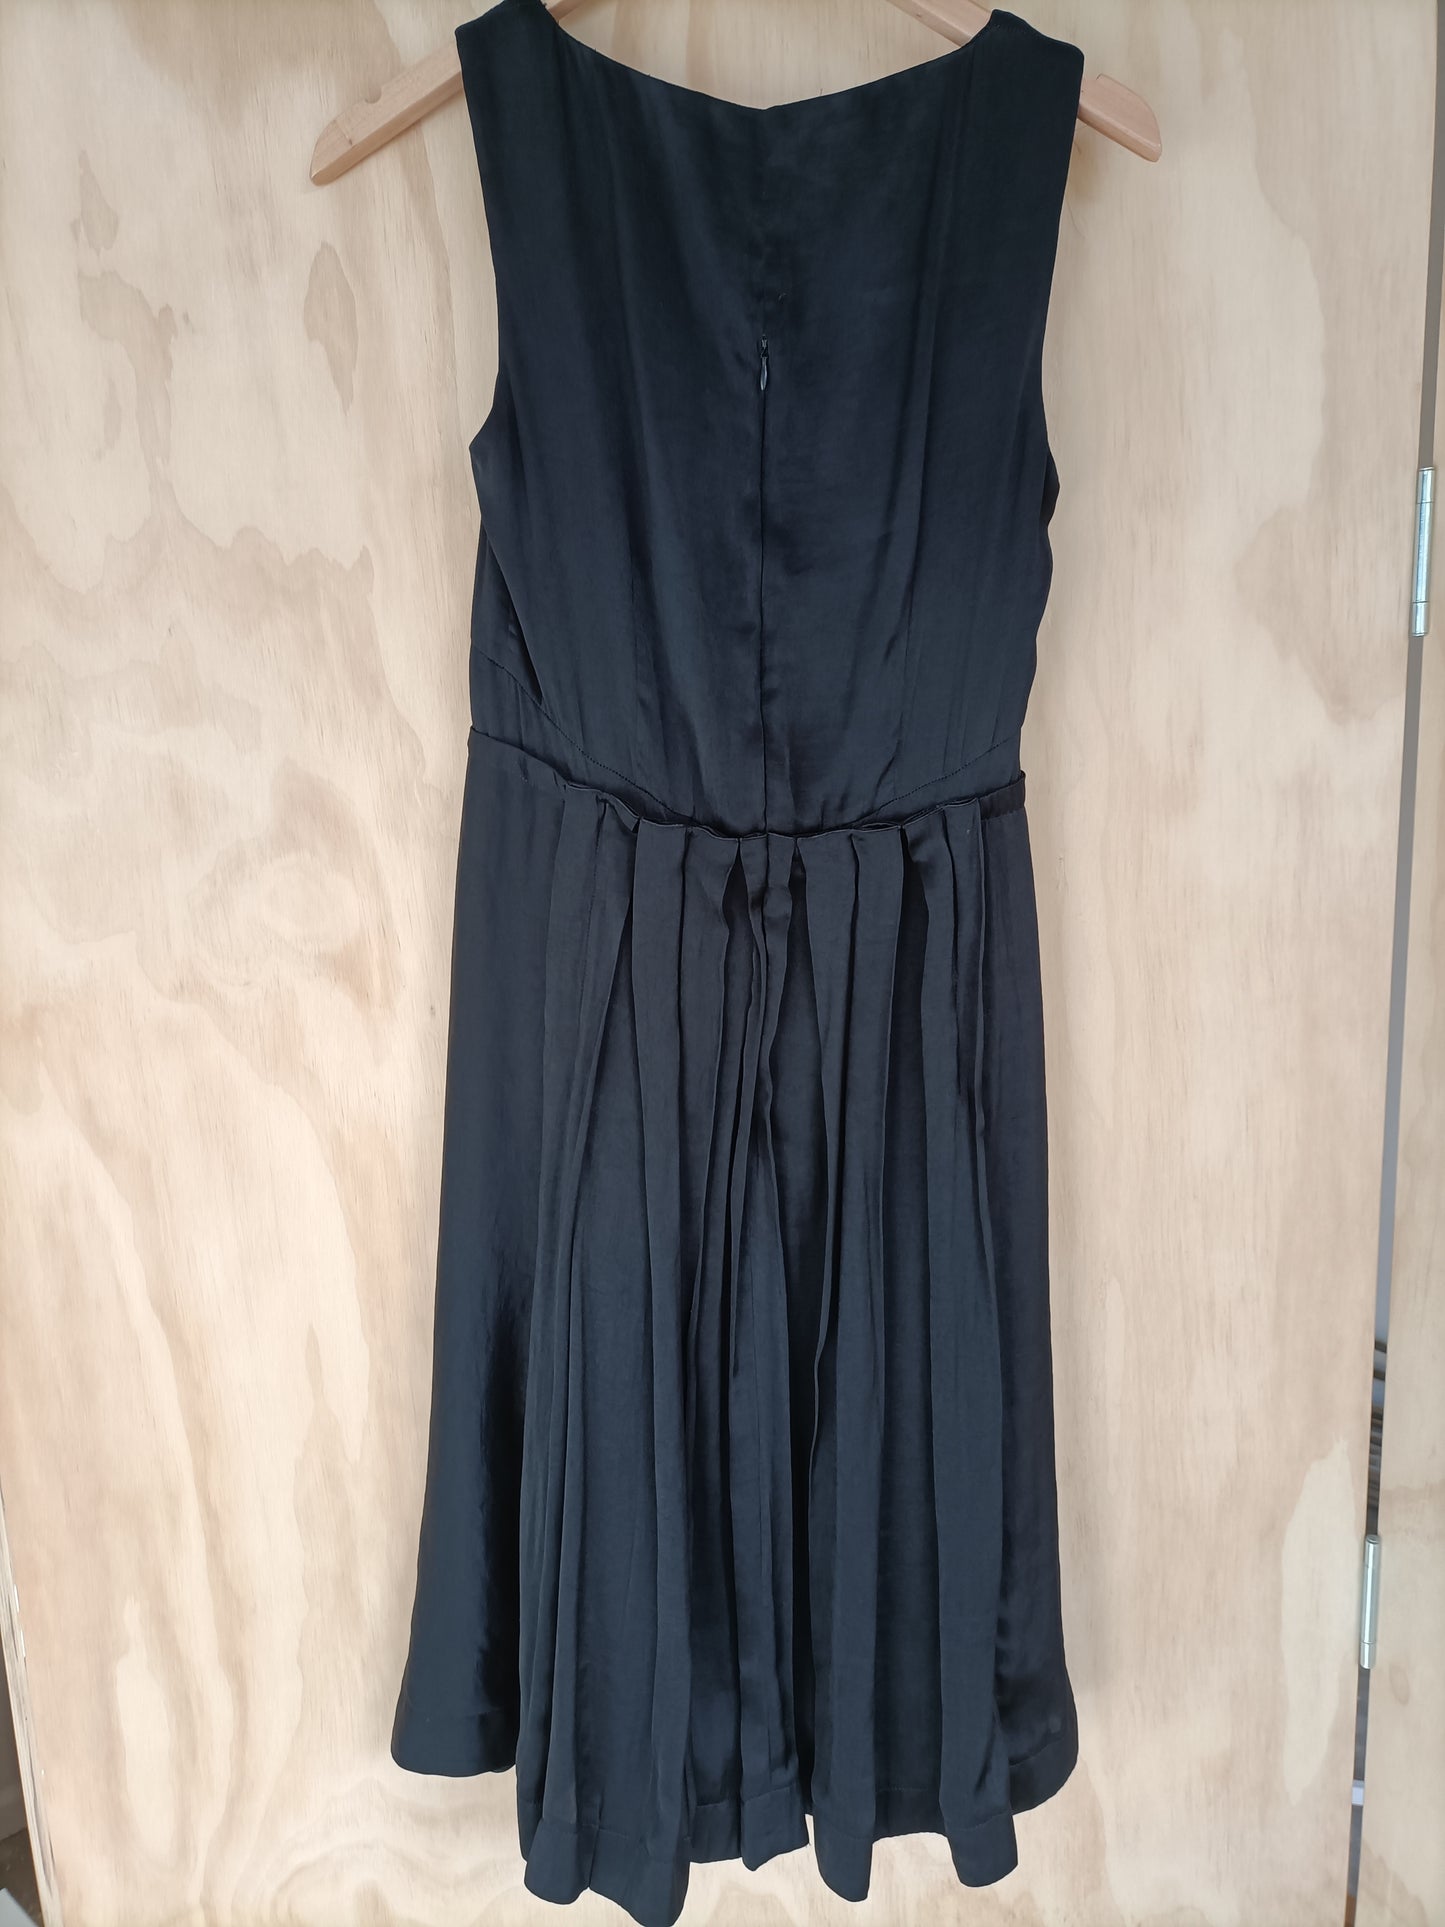 Cacharel - Black Satin Dress with Pleat Detail - Size UK 10